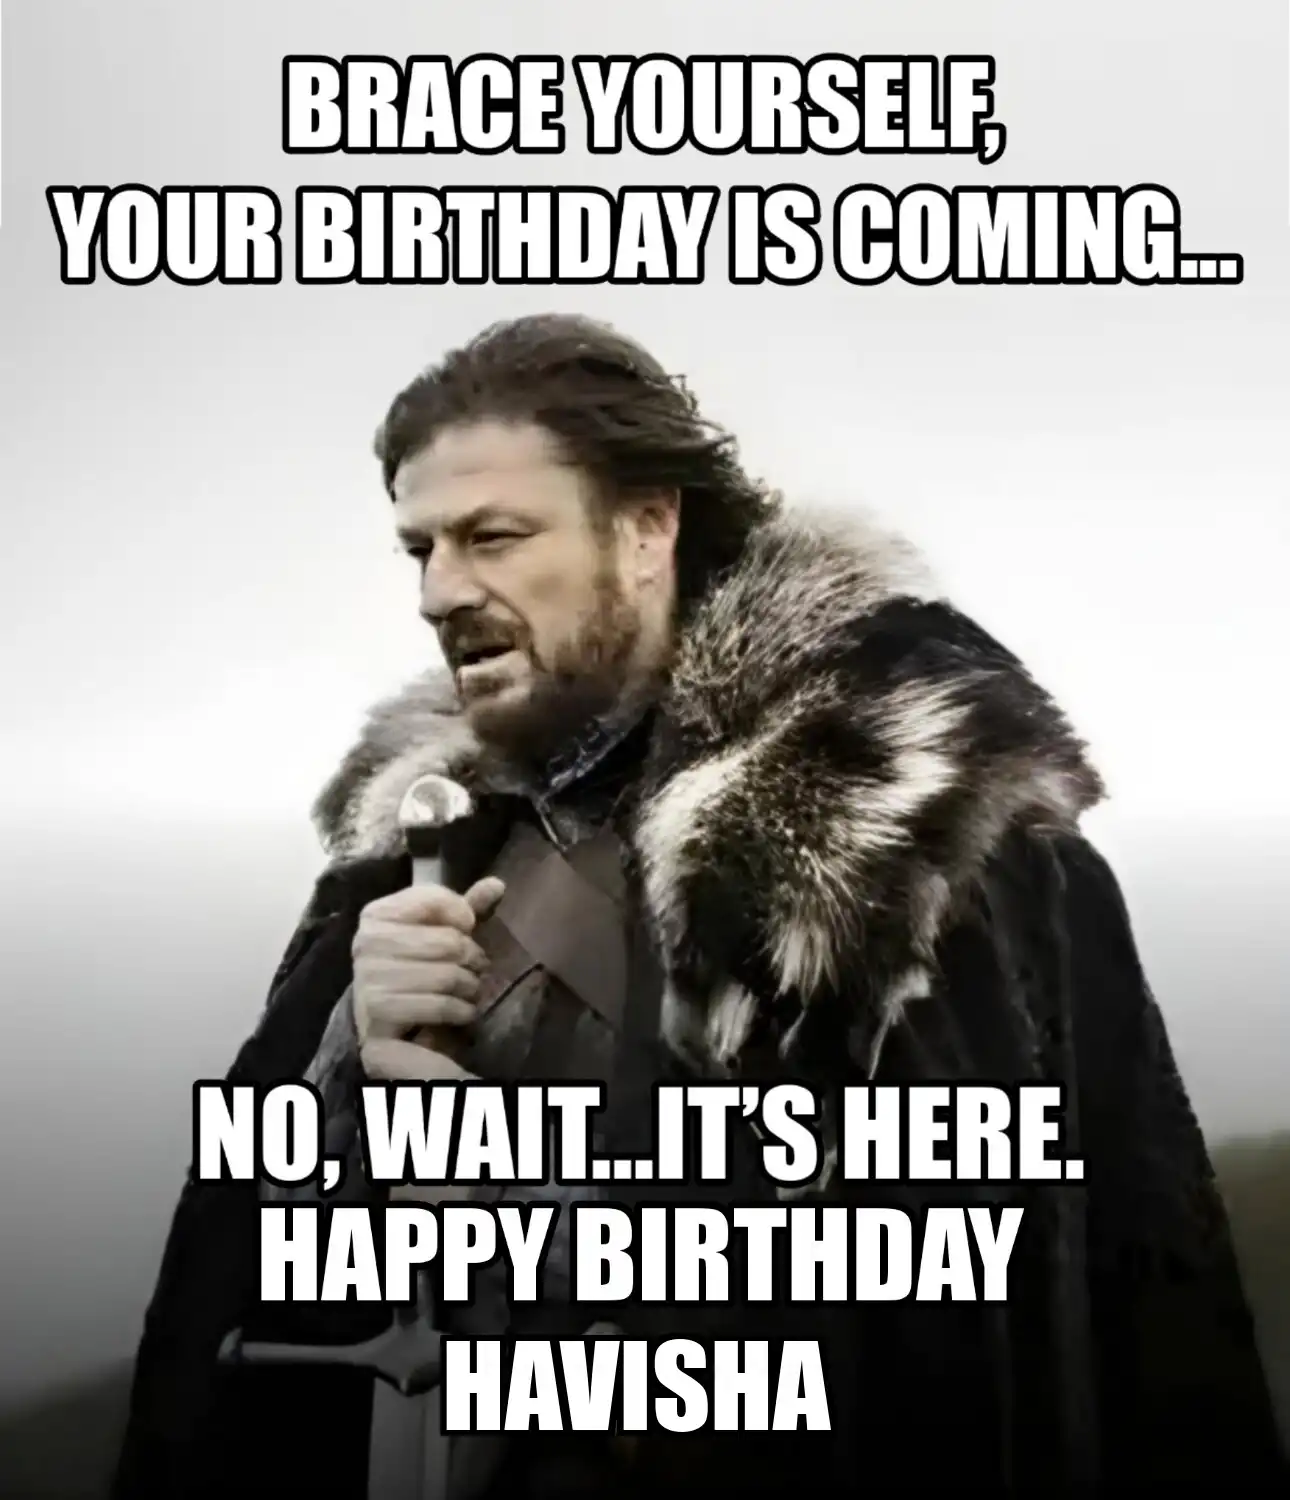 Happy Birthday Havisha Brace Yourself Your Birthday Is Coming Meme